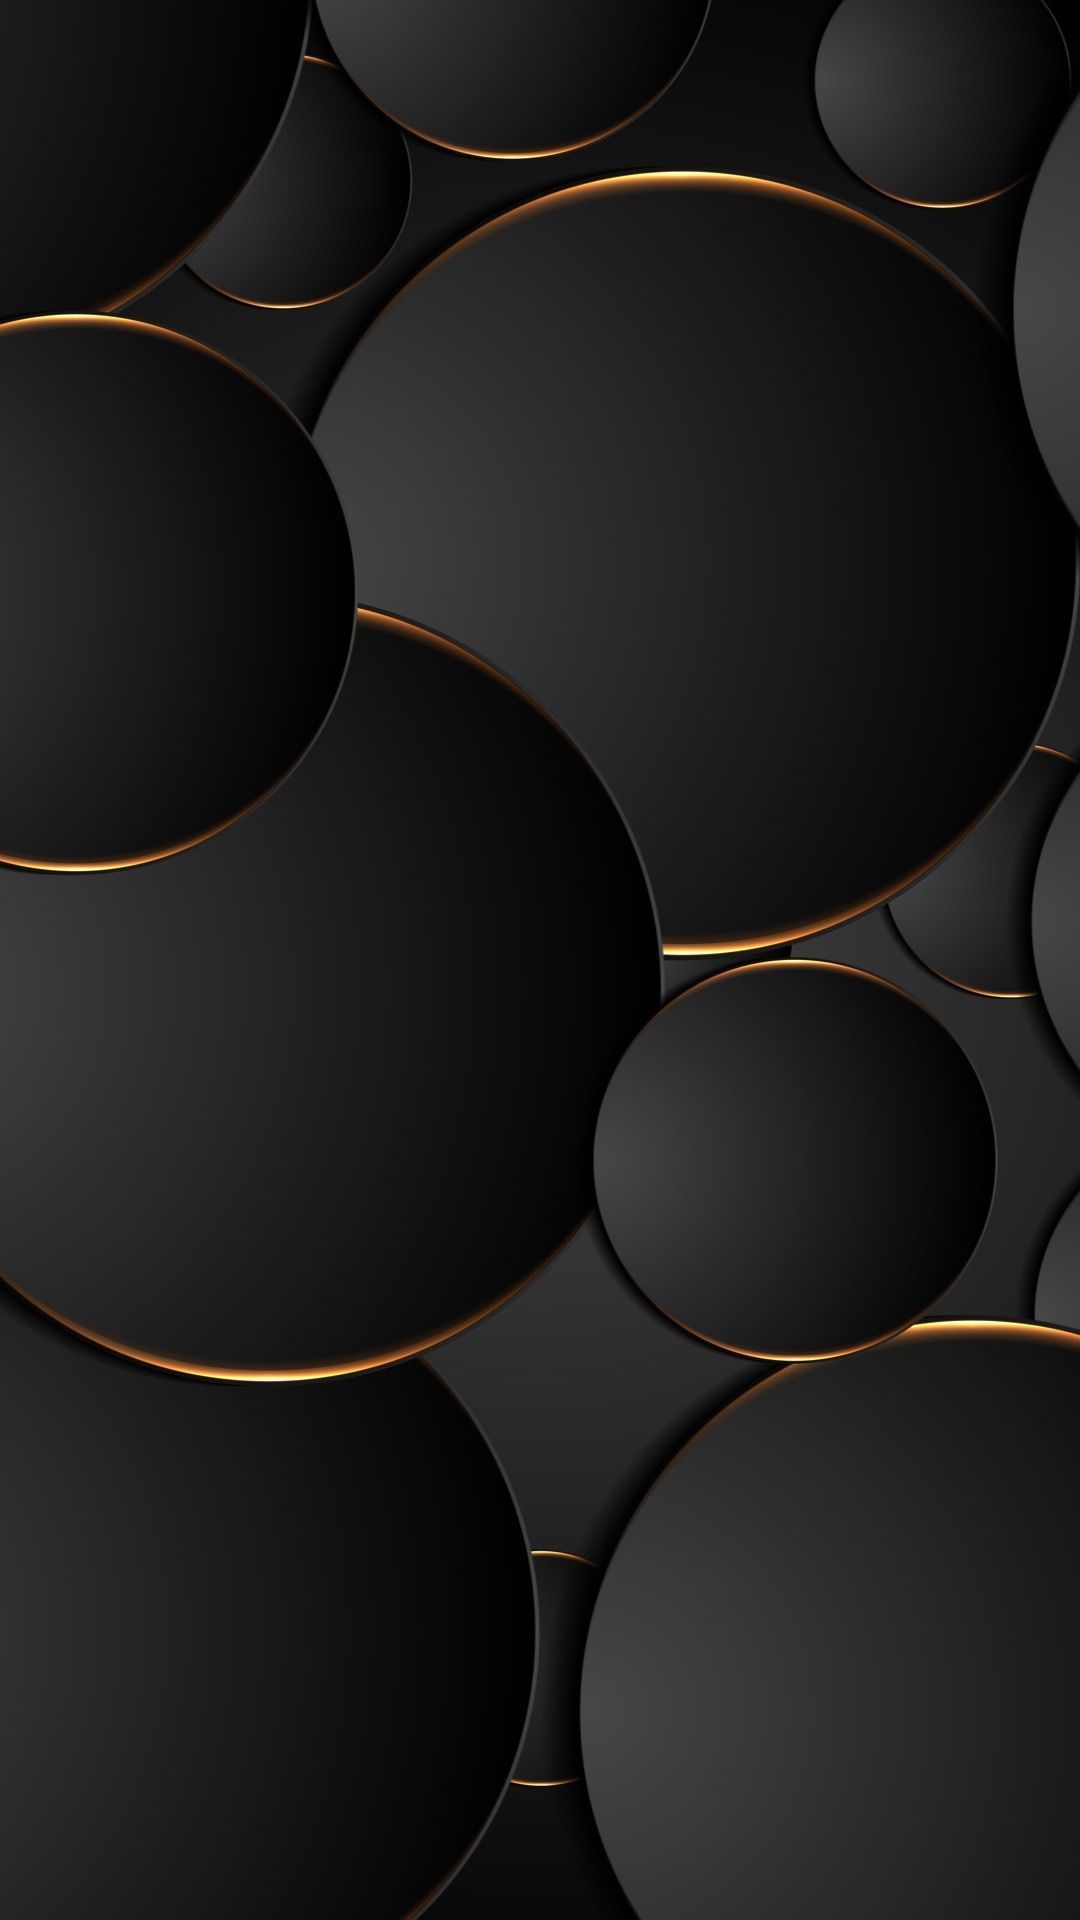 3D Black Circle Wallpapers   Top Free 3D Black Circle Backgrounds